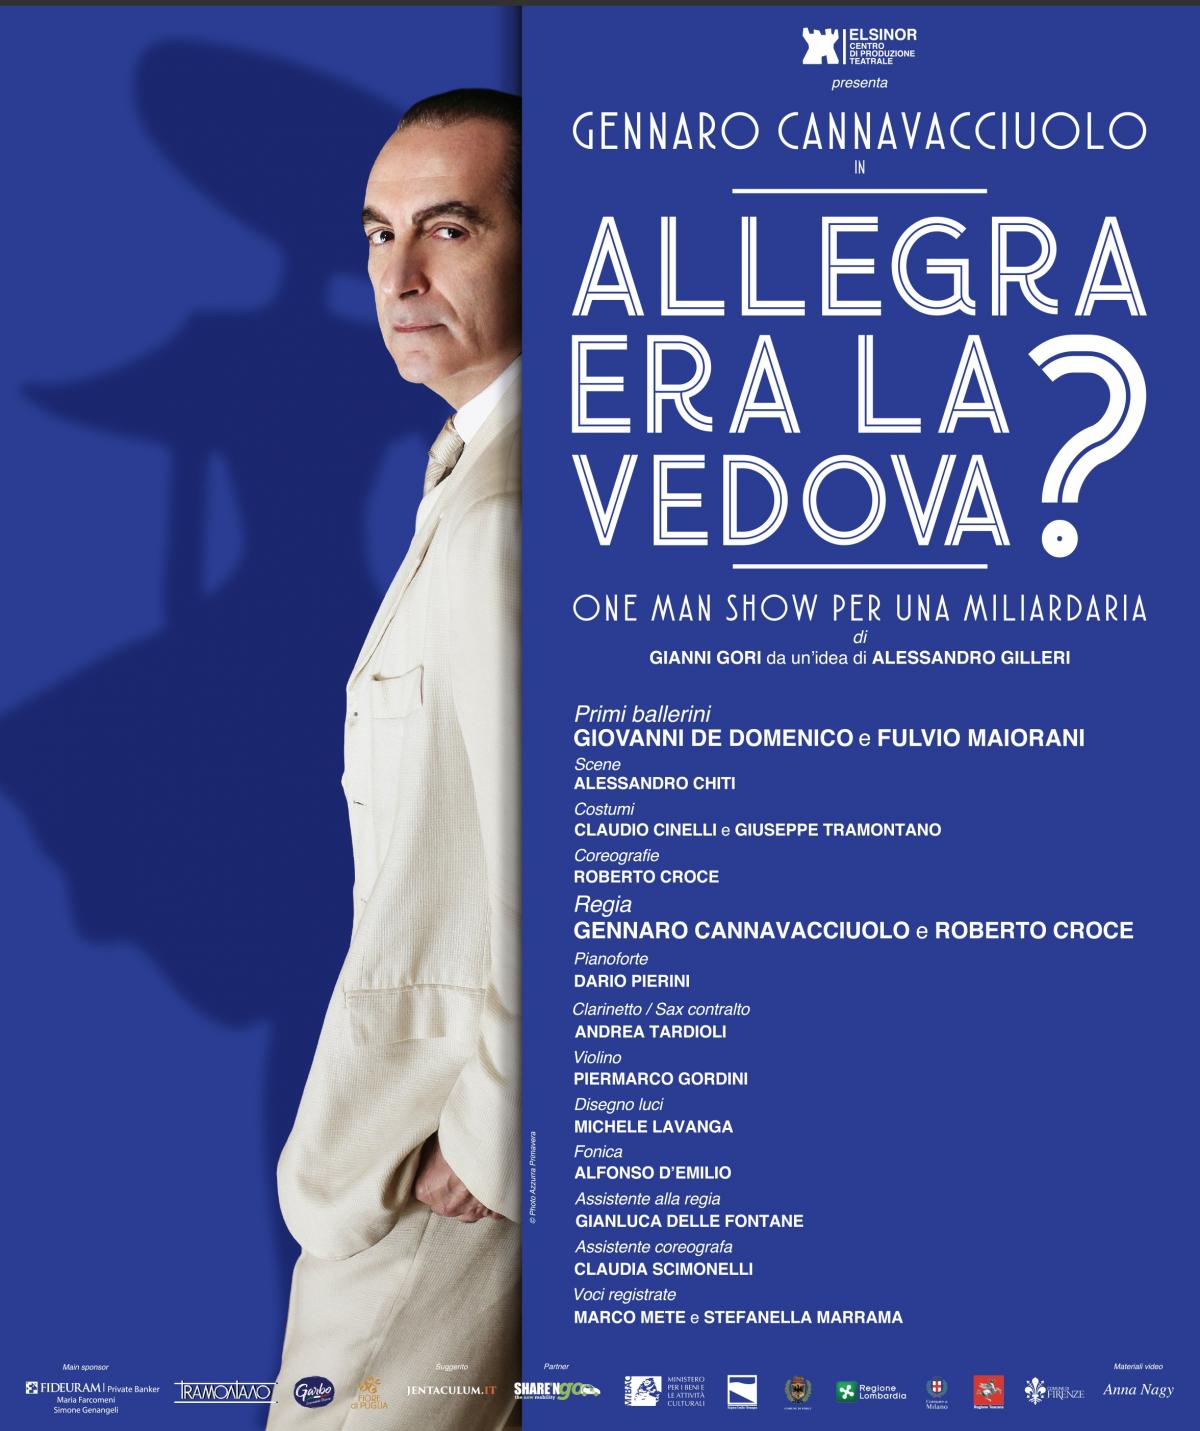 Tournee Spettacolo Allegra era la Vedova? 2018-2019